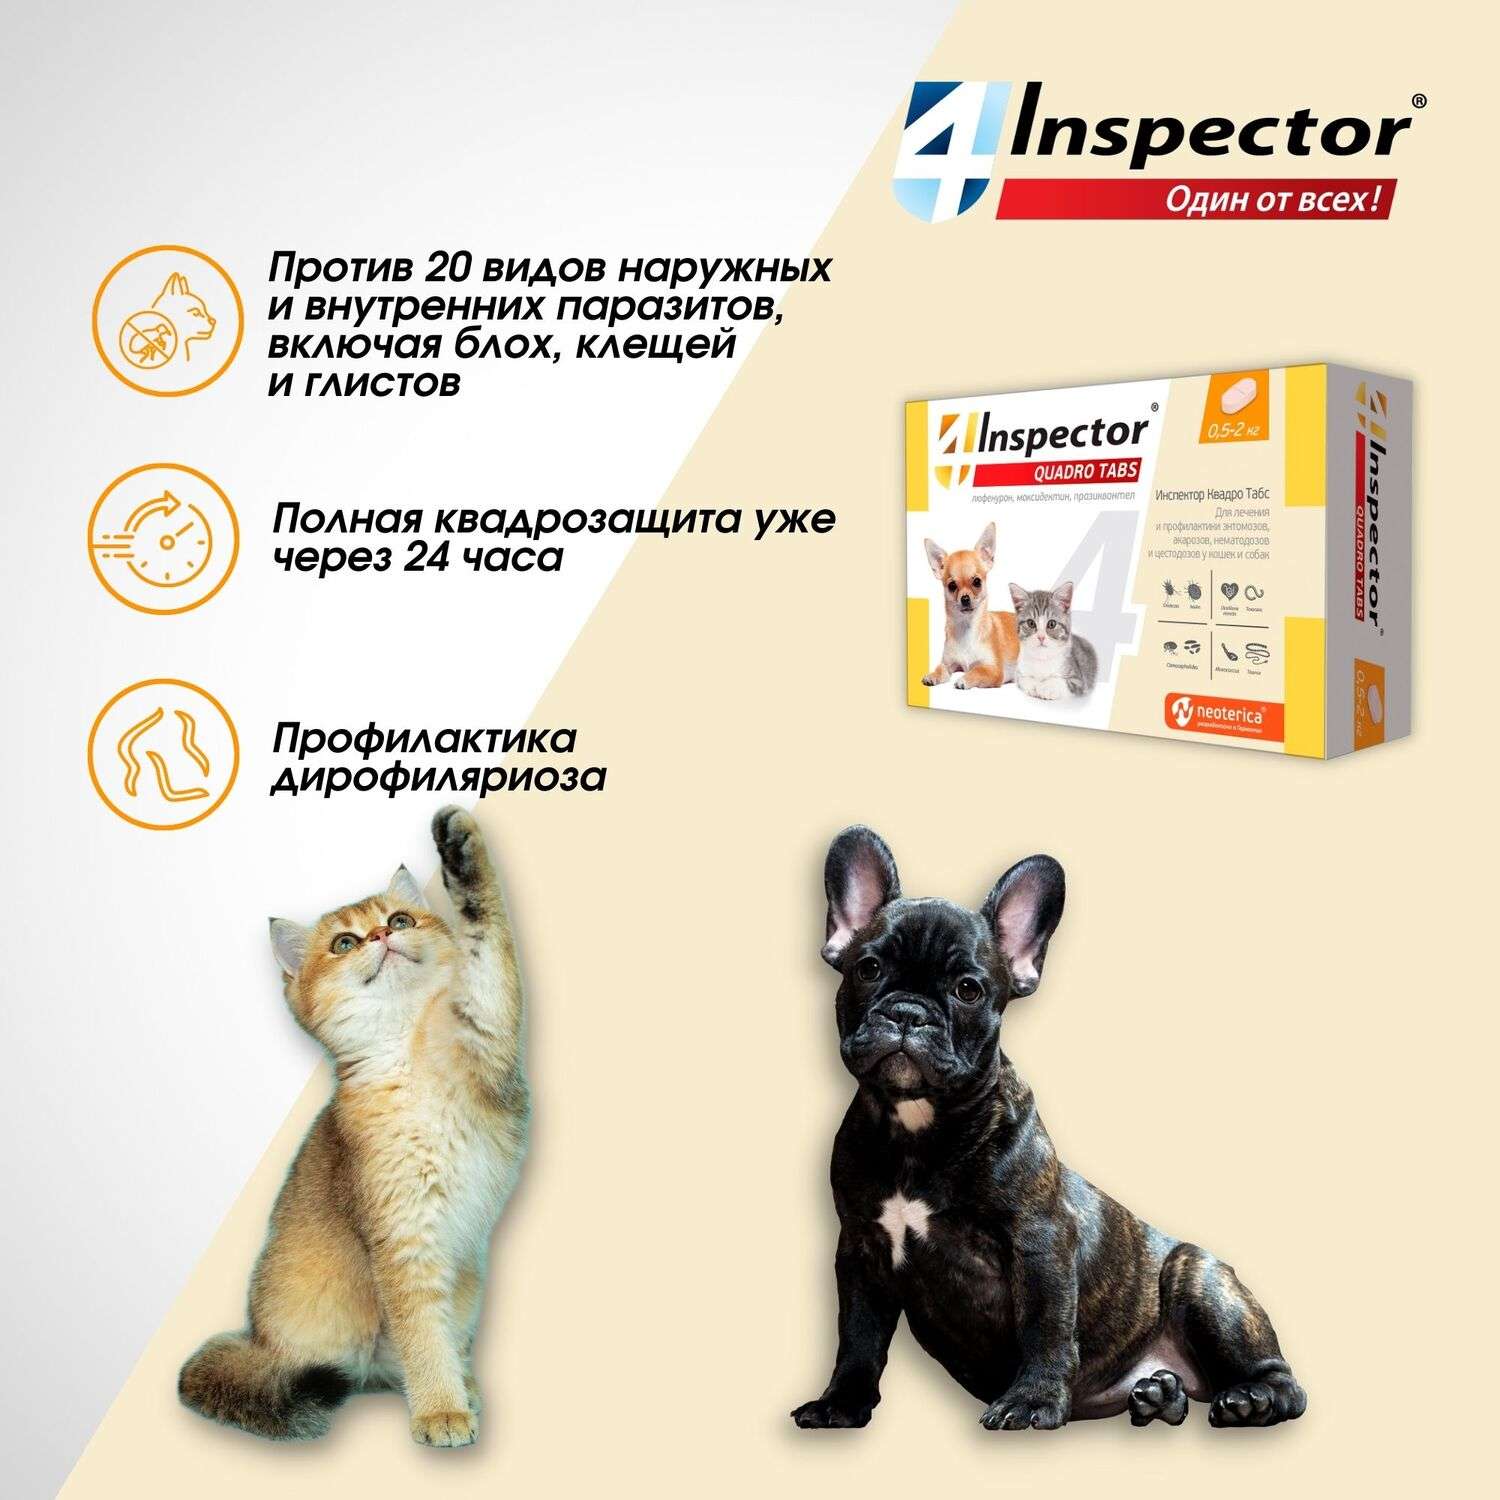 Inspector quadro tabs цены. Inspector Quadro таблетки для собак 2-8 кг. Таблетки от клещей для собак инспектор. Таблетки для глистов инспектор для собак. Таблетки и от блох и от глистов для собак.